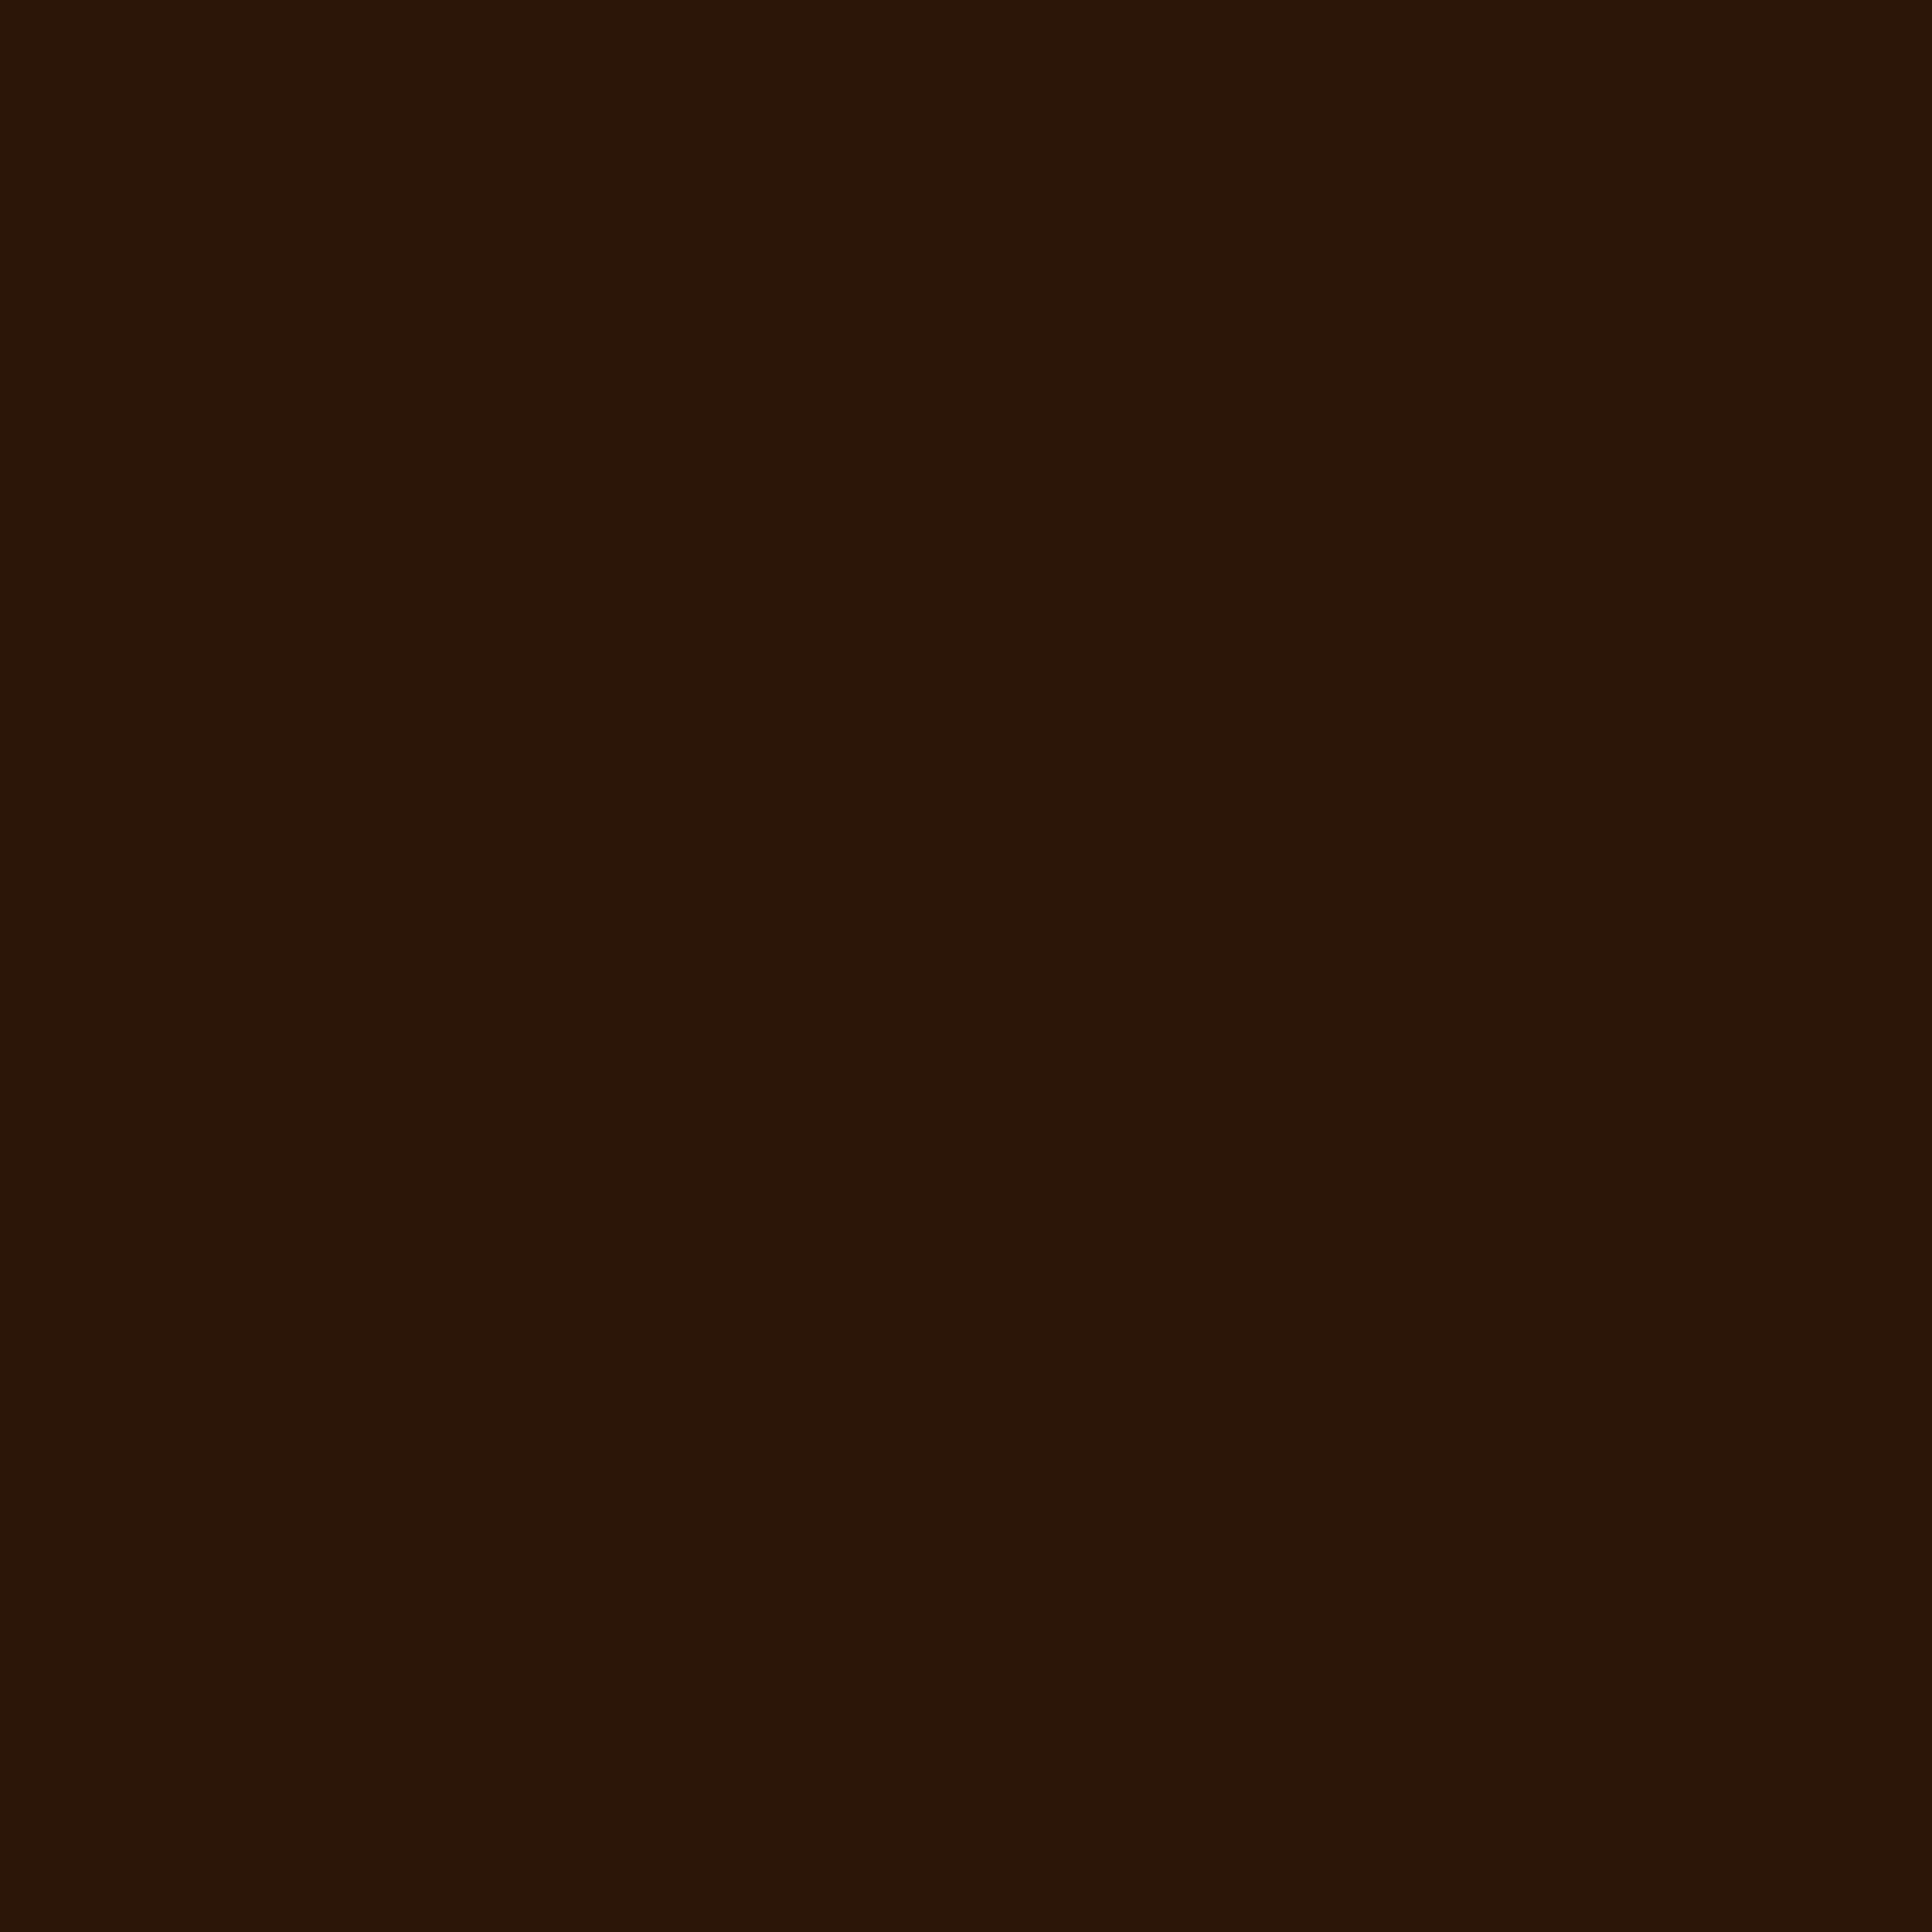 3600x3600 Zinnwaldite Brown Solid Color Background